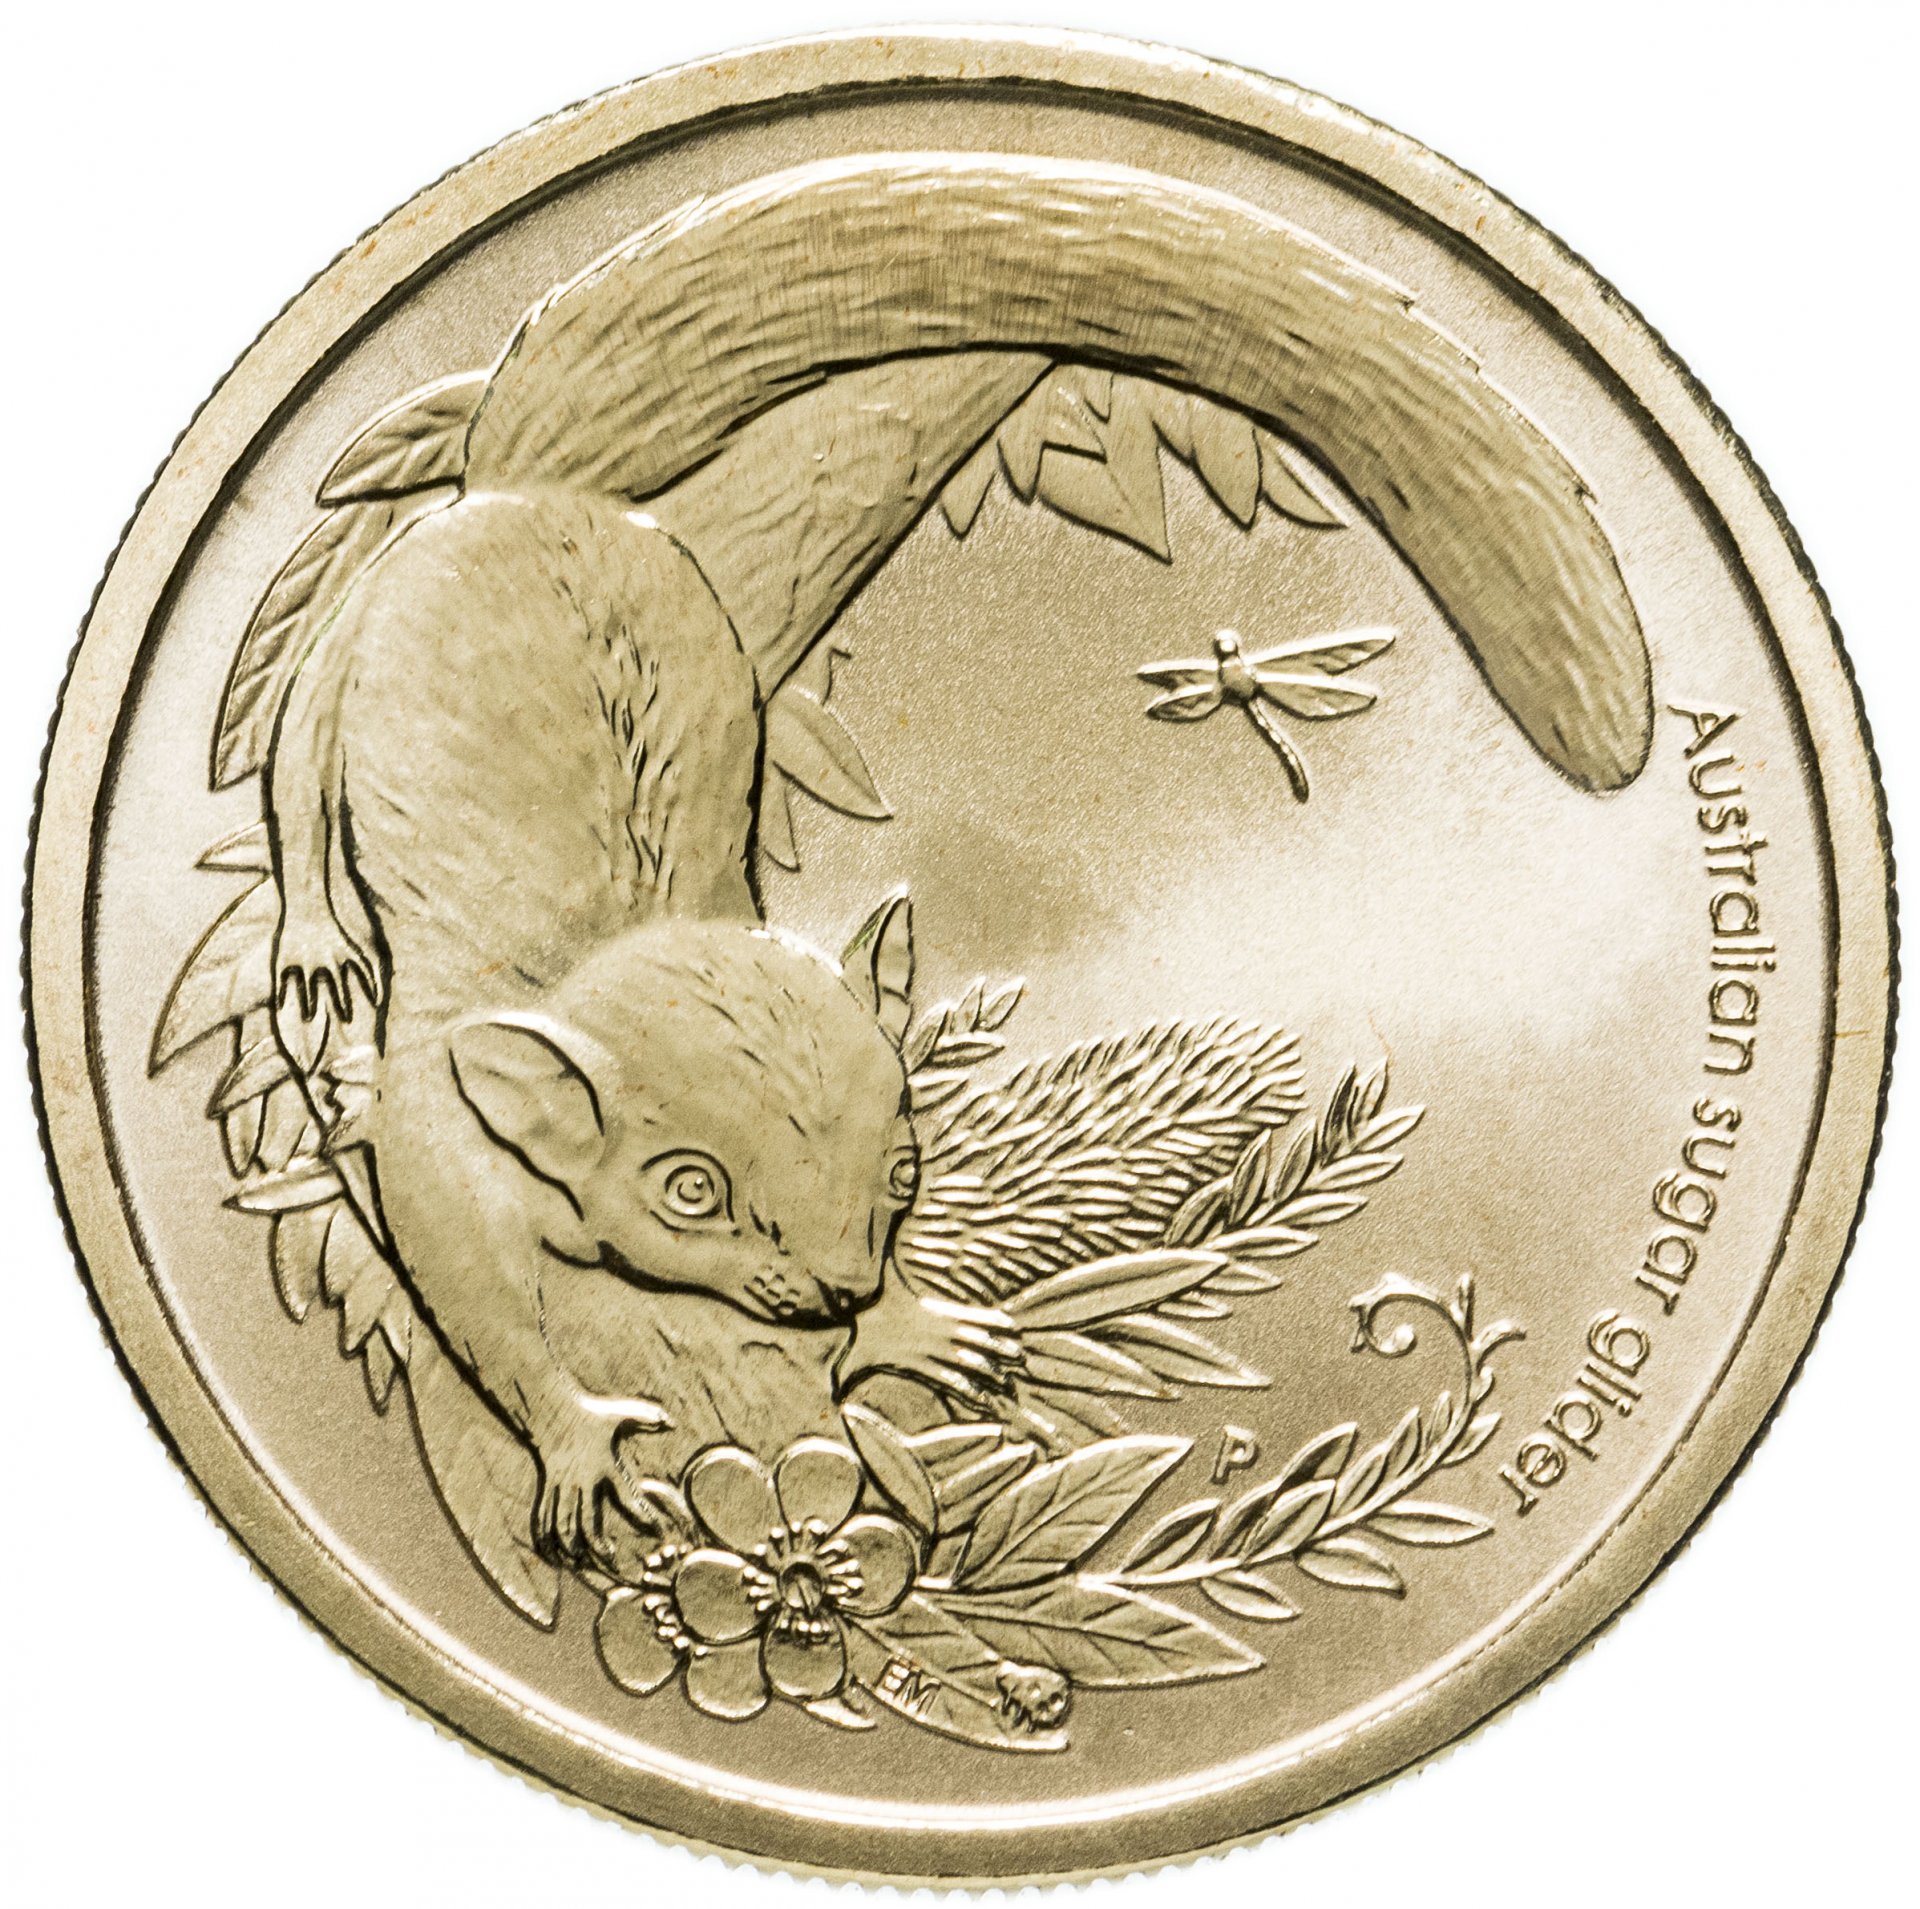 Монета австралия 1 доллар. Монеты Австралии. 1 Доллар Австралия. Австралийский доллар монета. Австралийские монеты с животными.